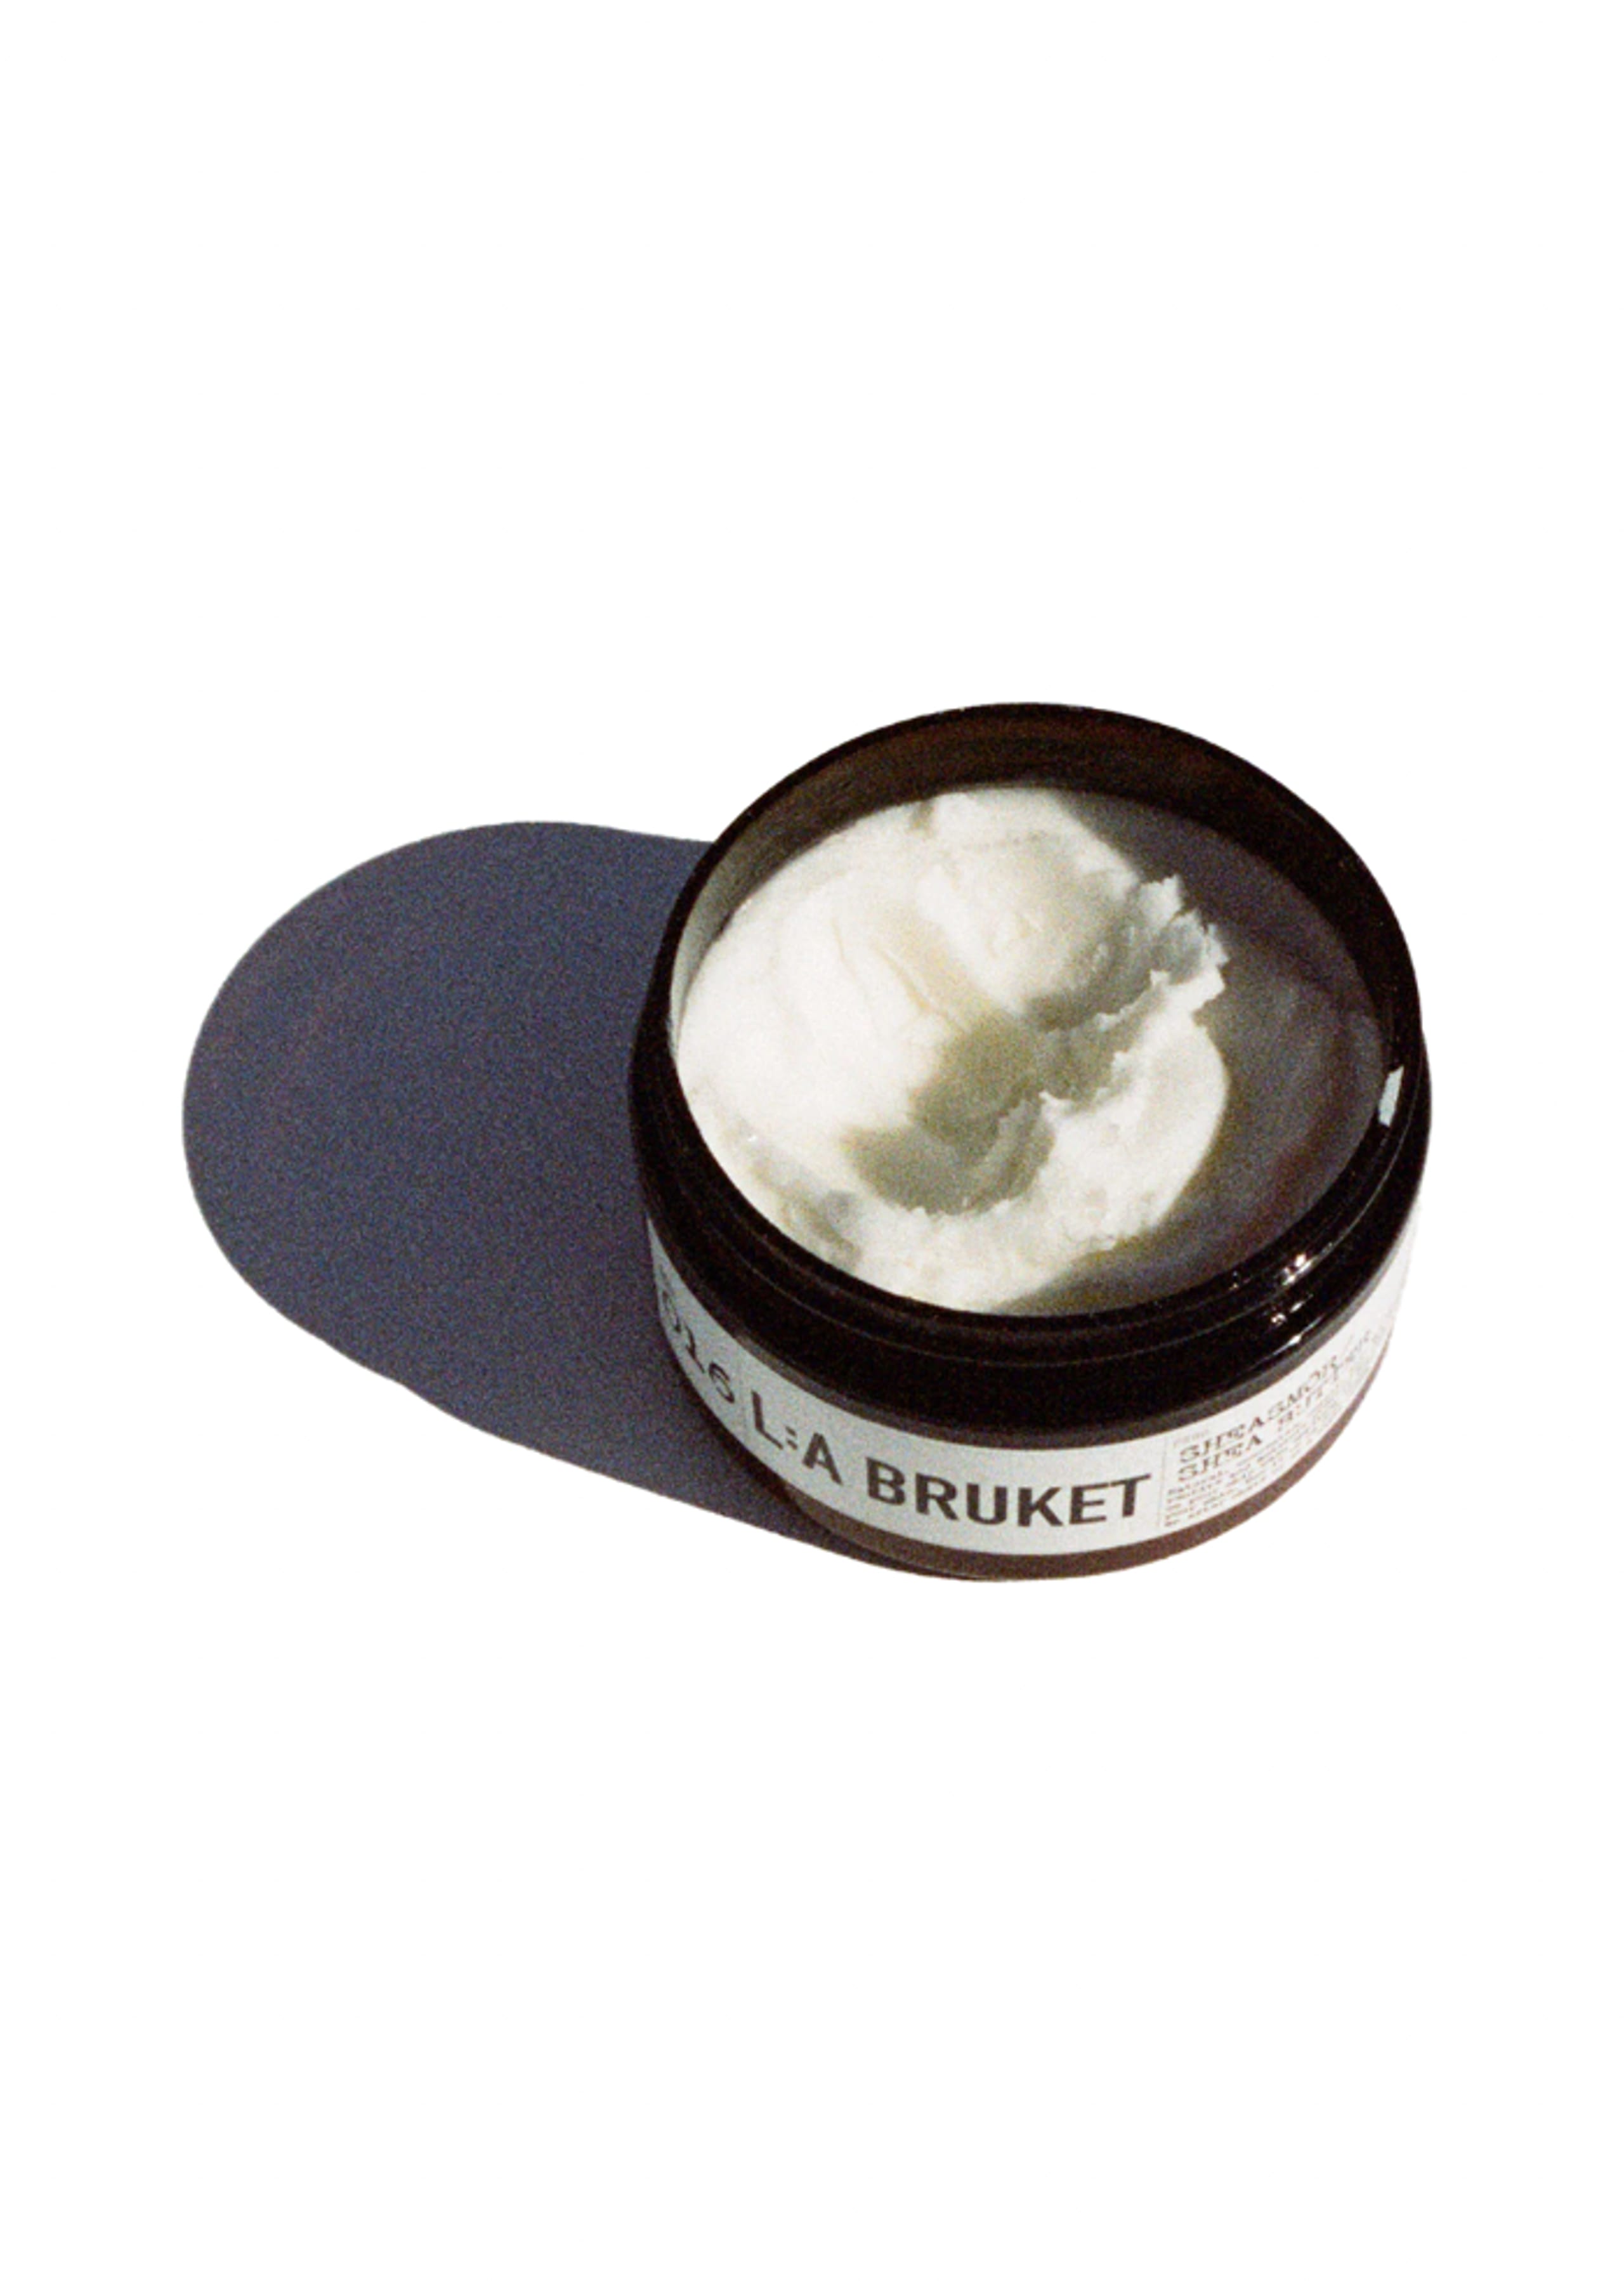 L:A Bruket - Loção Corporal - No. 016 Shea Butter Natural - No. 016 - Shea Butter Natural - 100 g